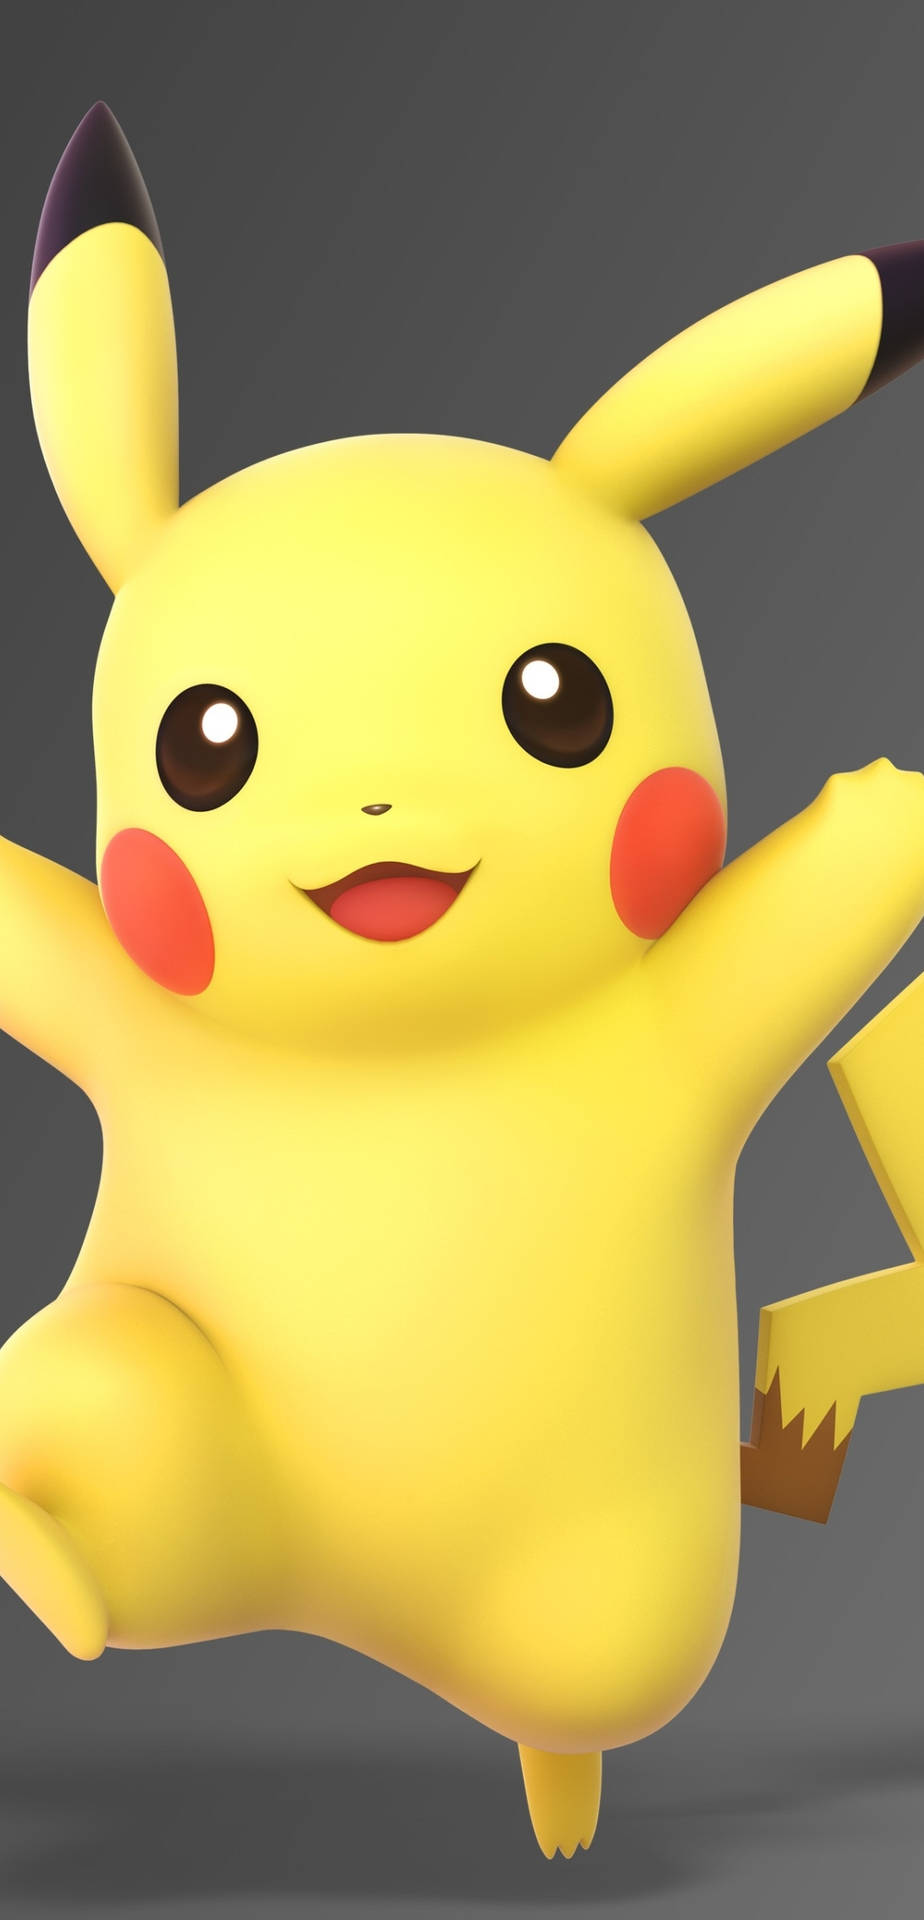 Pikachu 3d From Pokémon Yellow